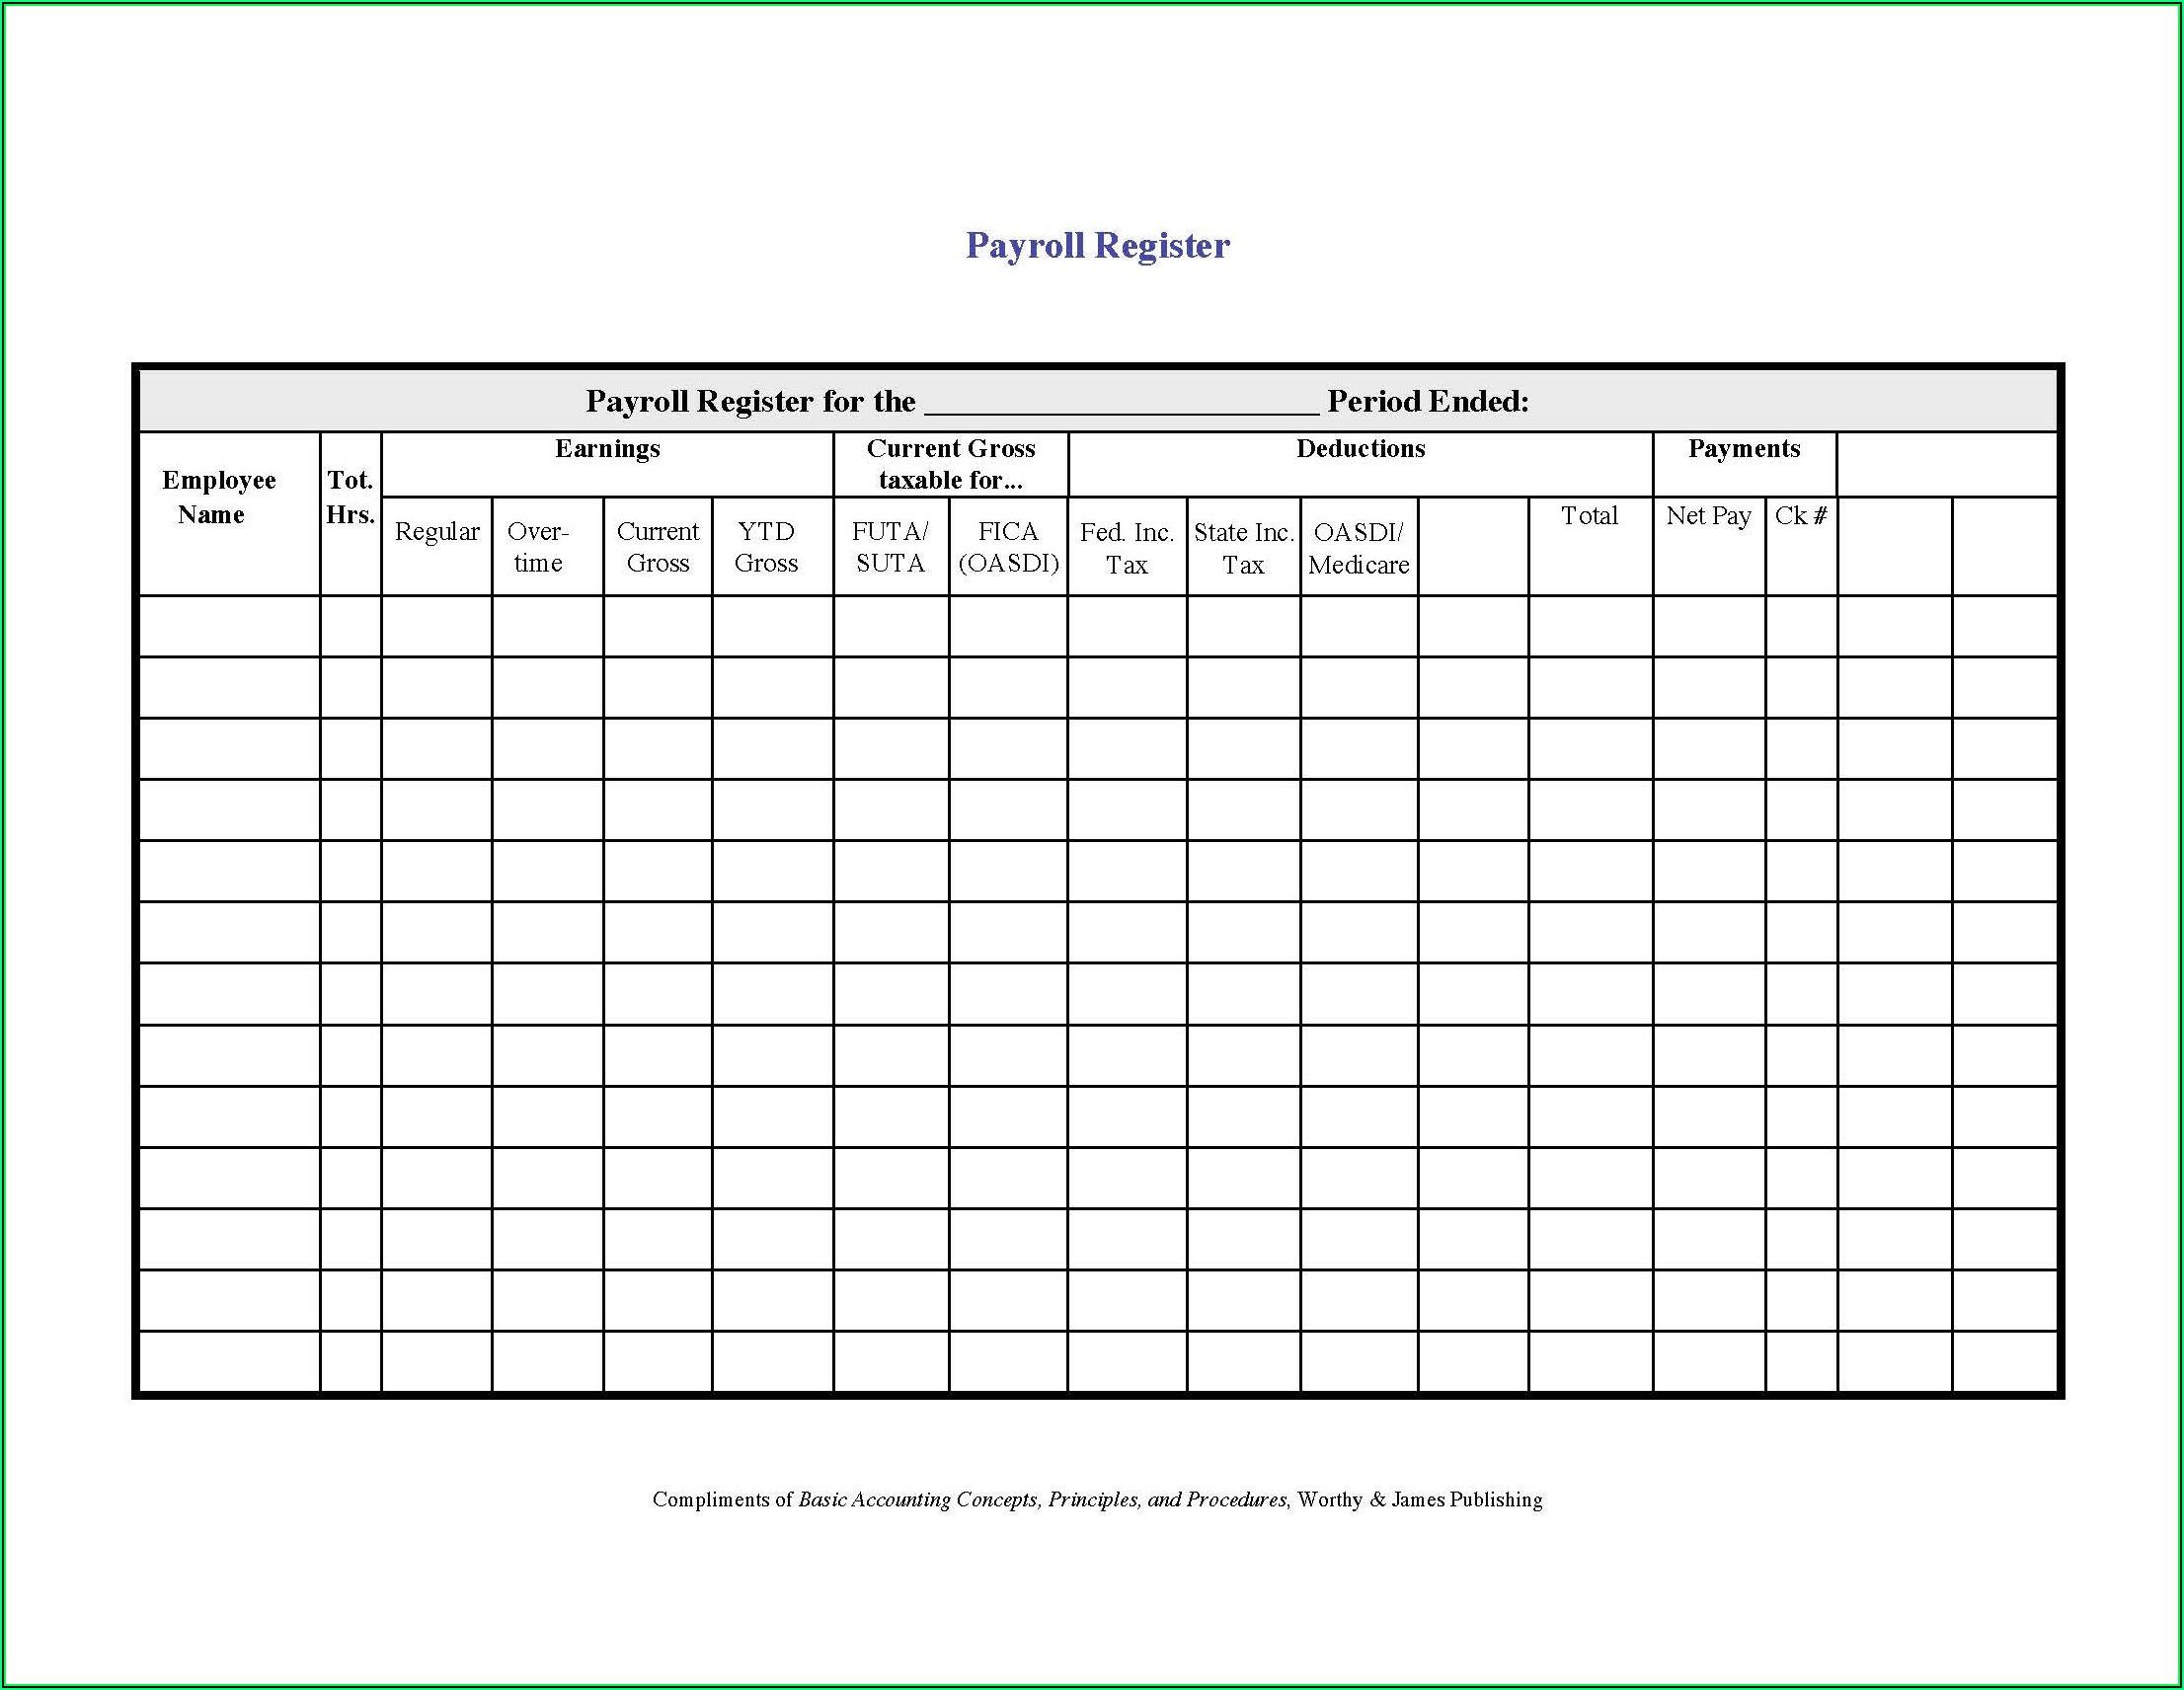 payroll-register-template-download-printable-pdf-templateroller